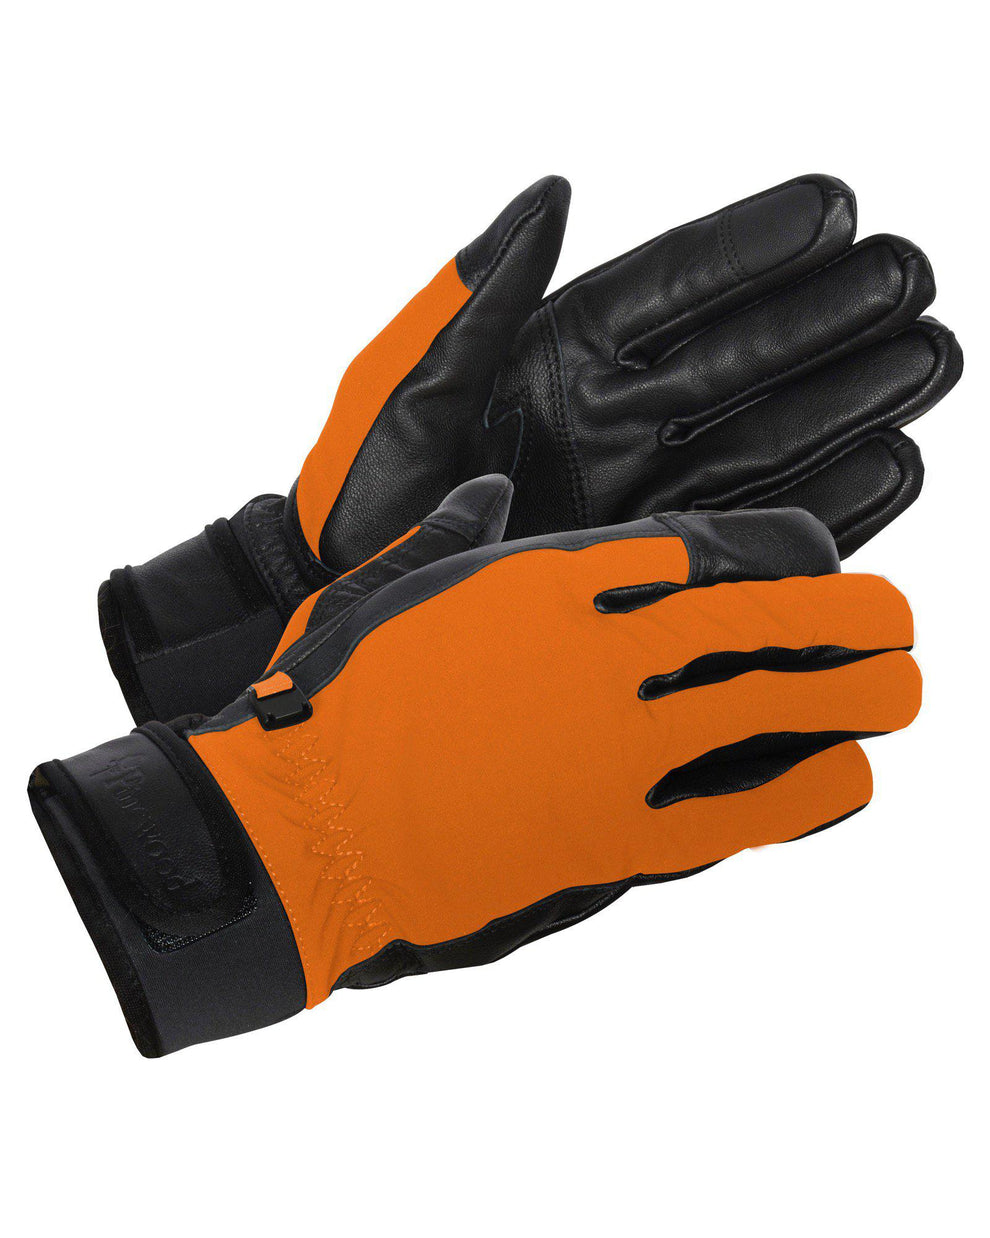 1147-538-01_Furudal-Hunters-Glove_Orange-Black